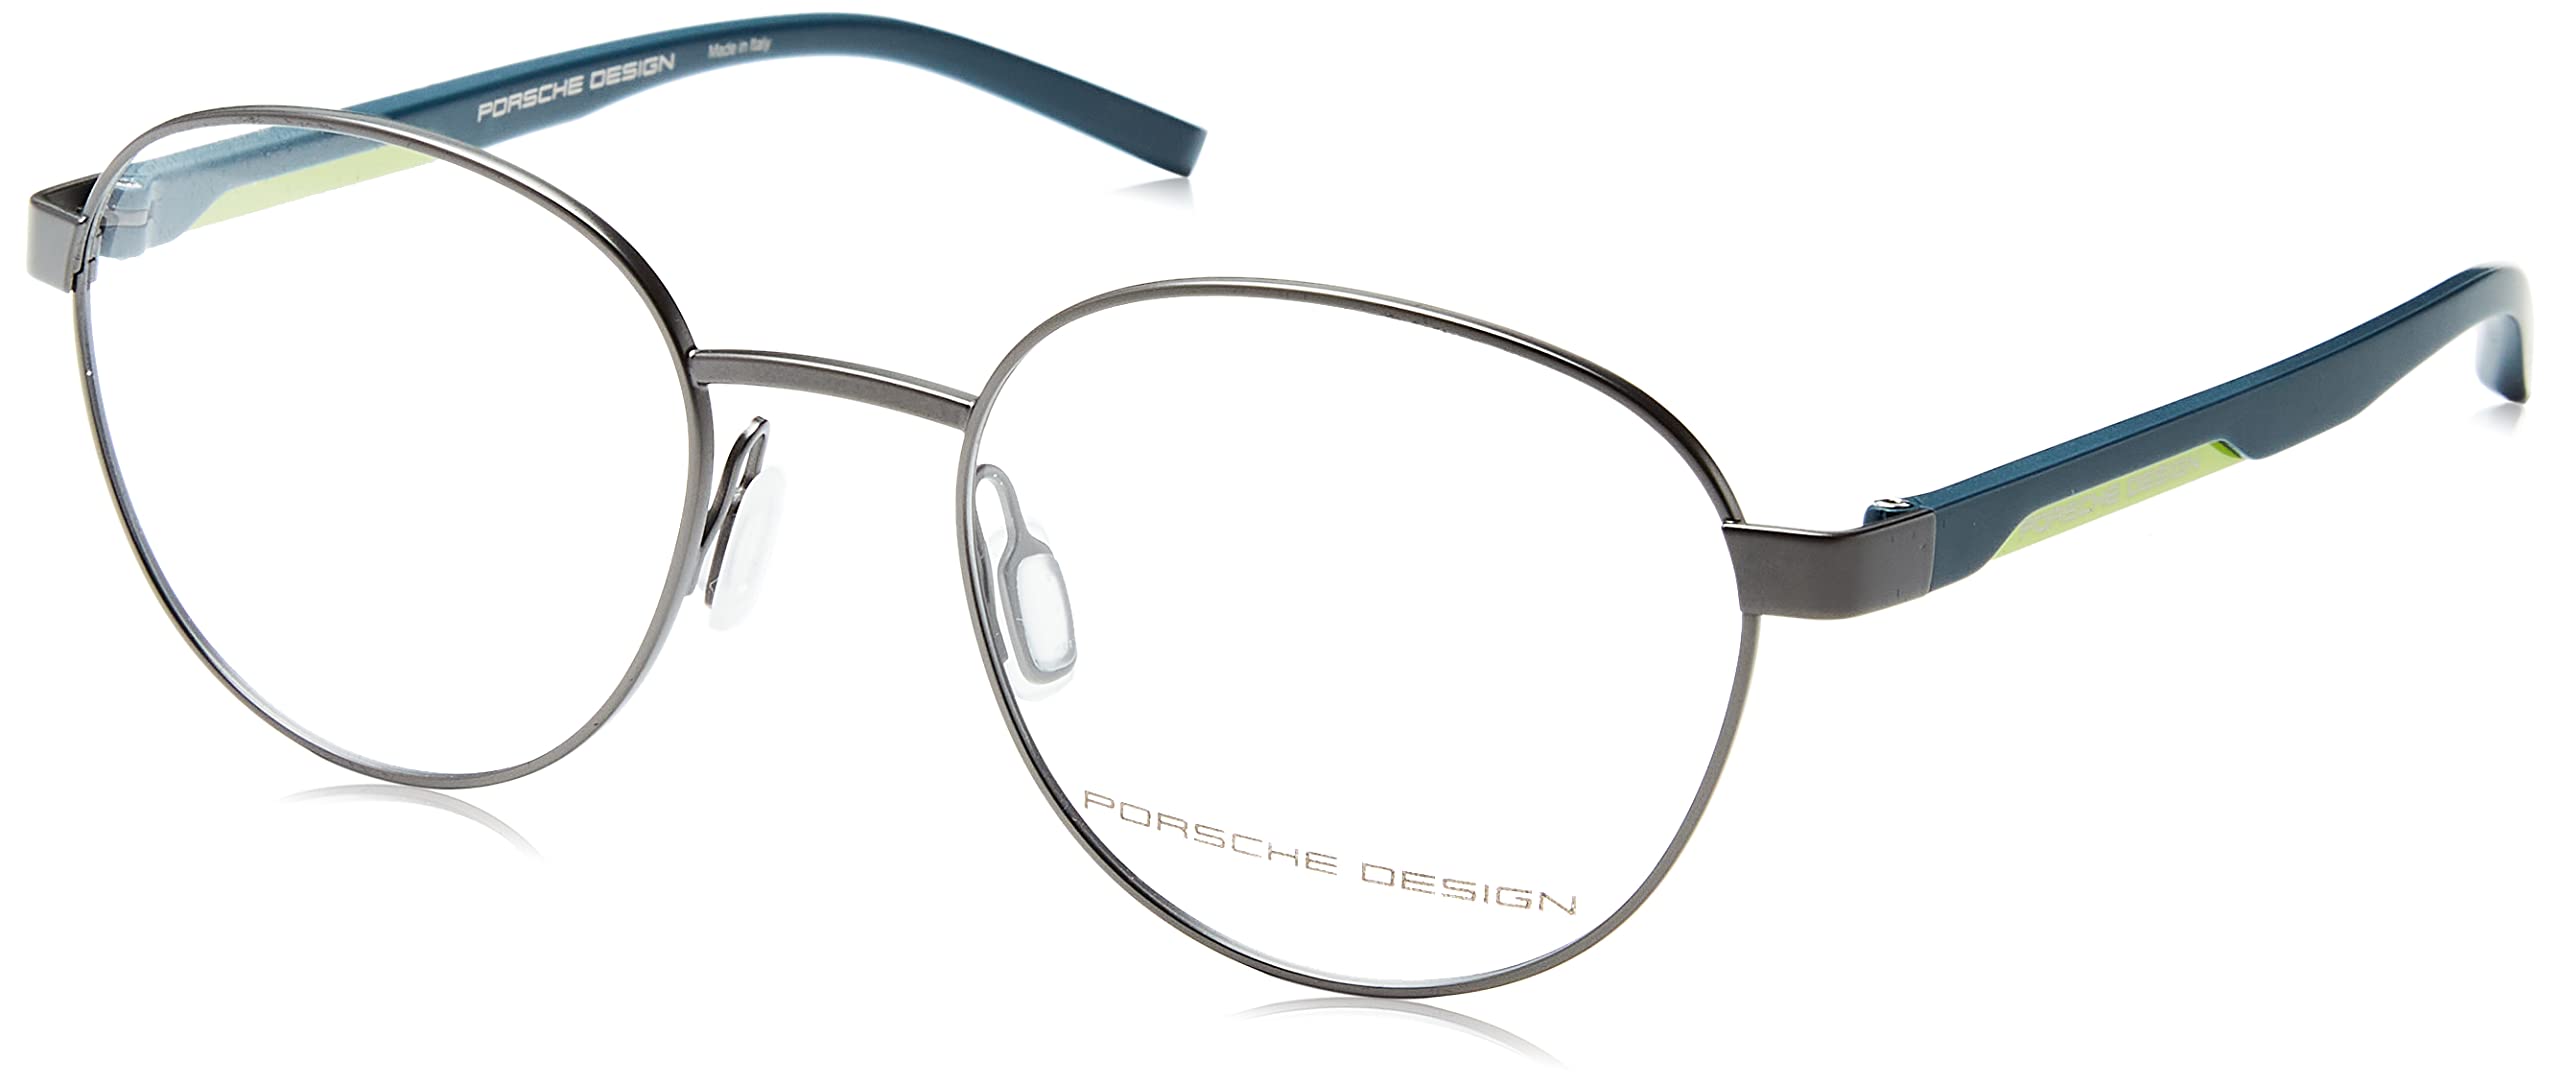 Porsche Design Men's P8746 Sunglasses, d, 53